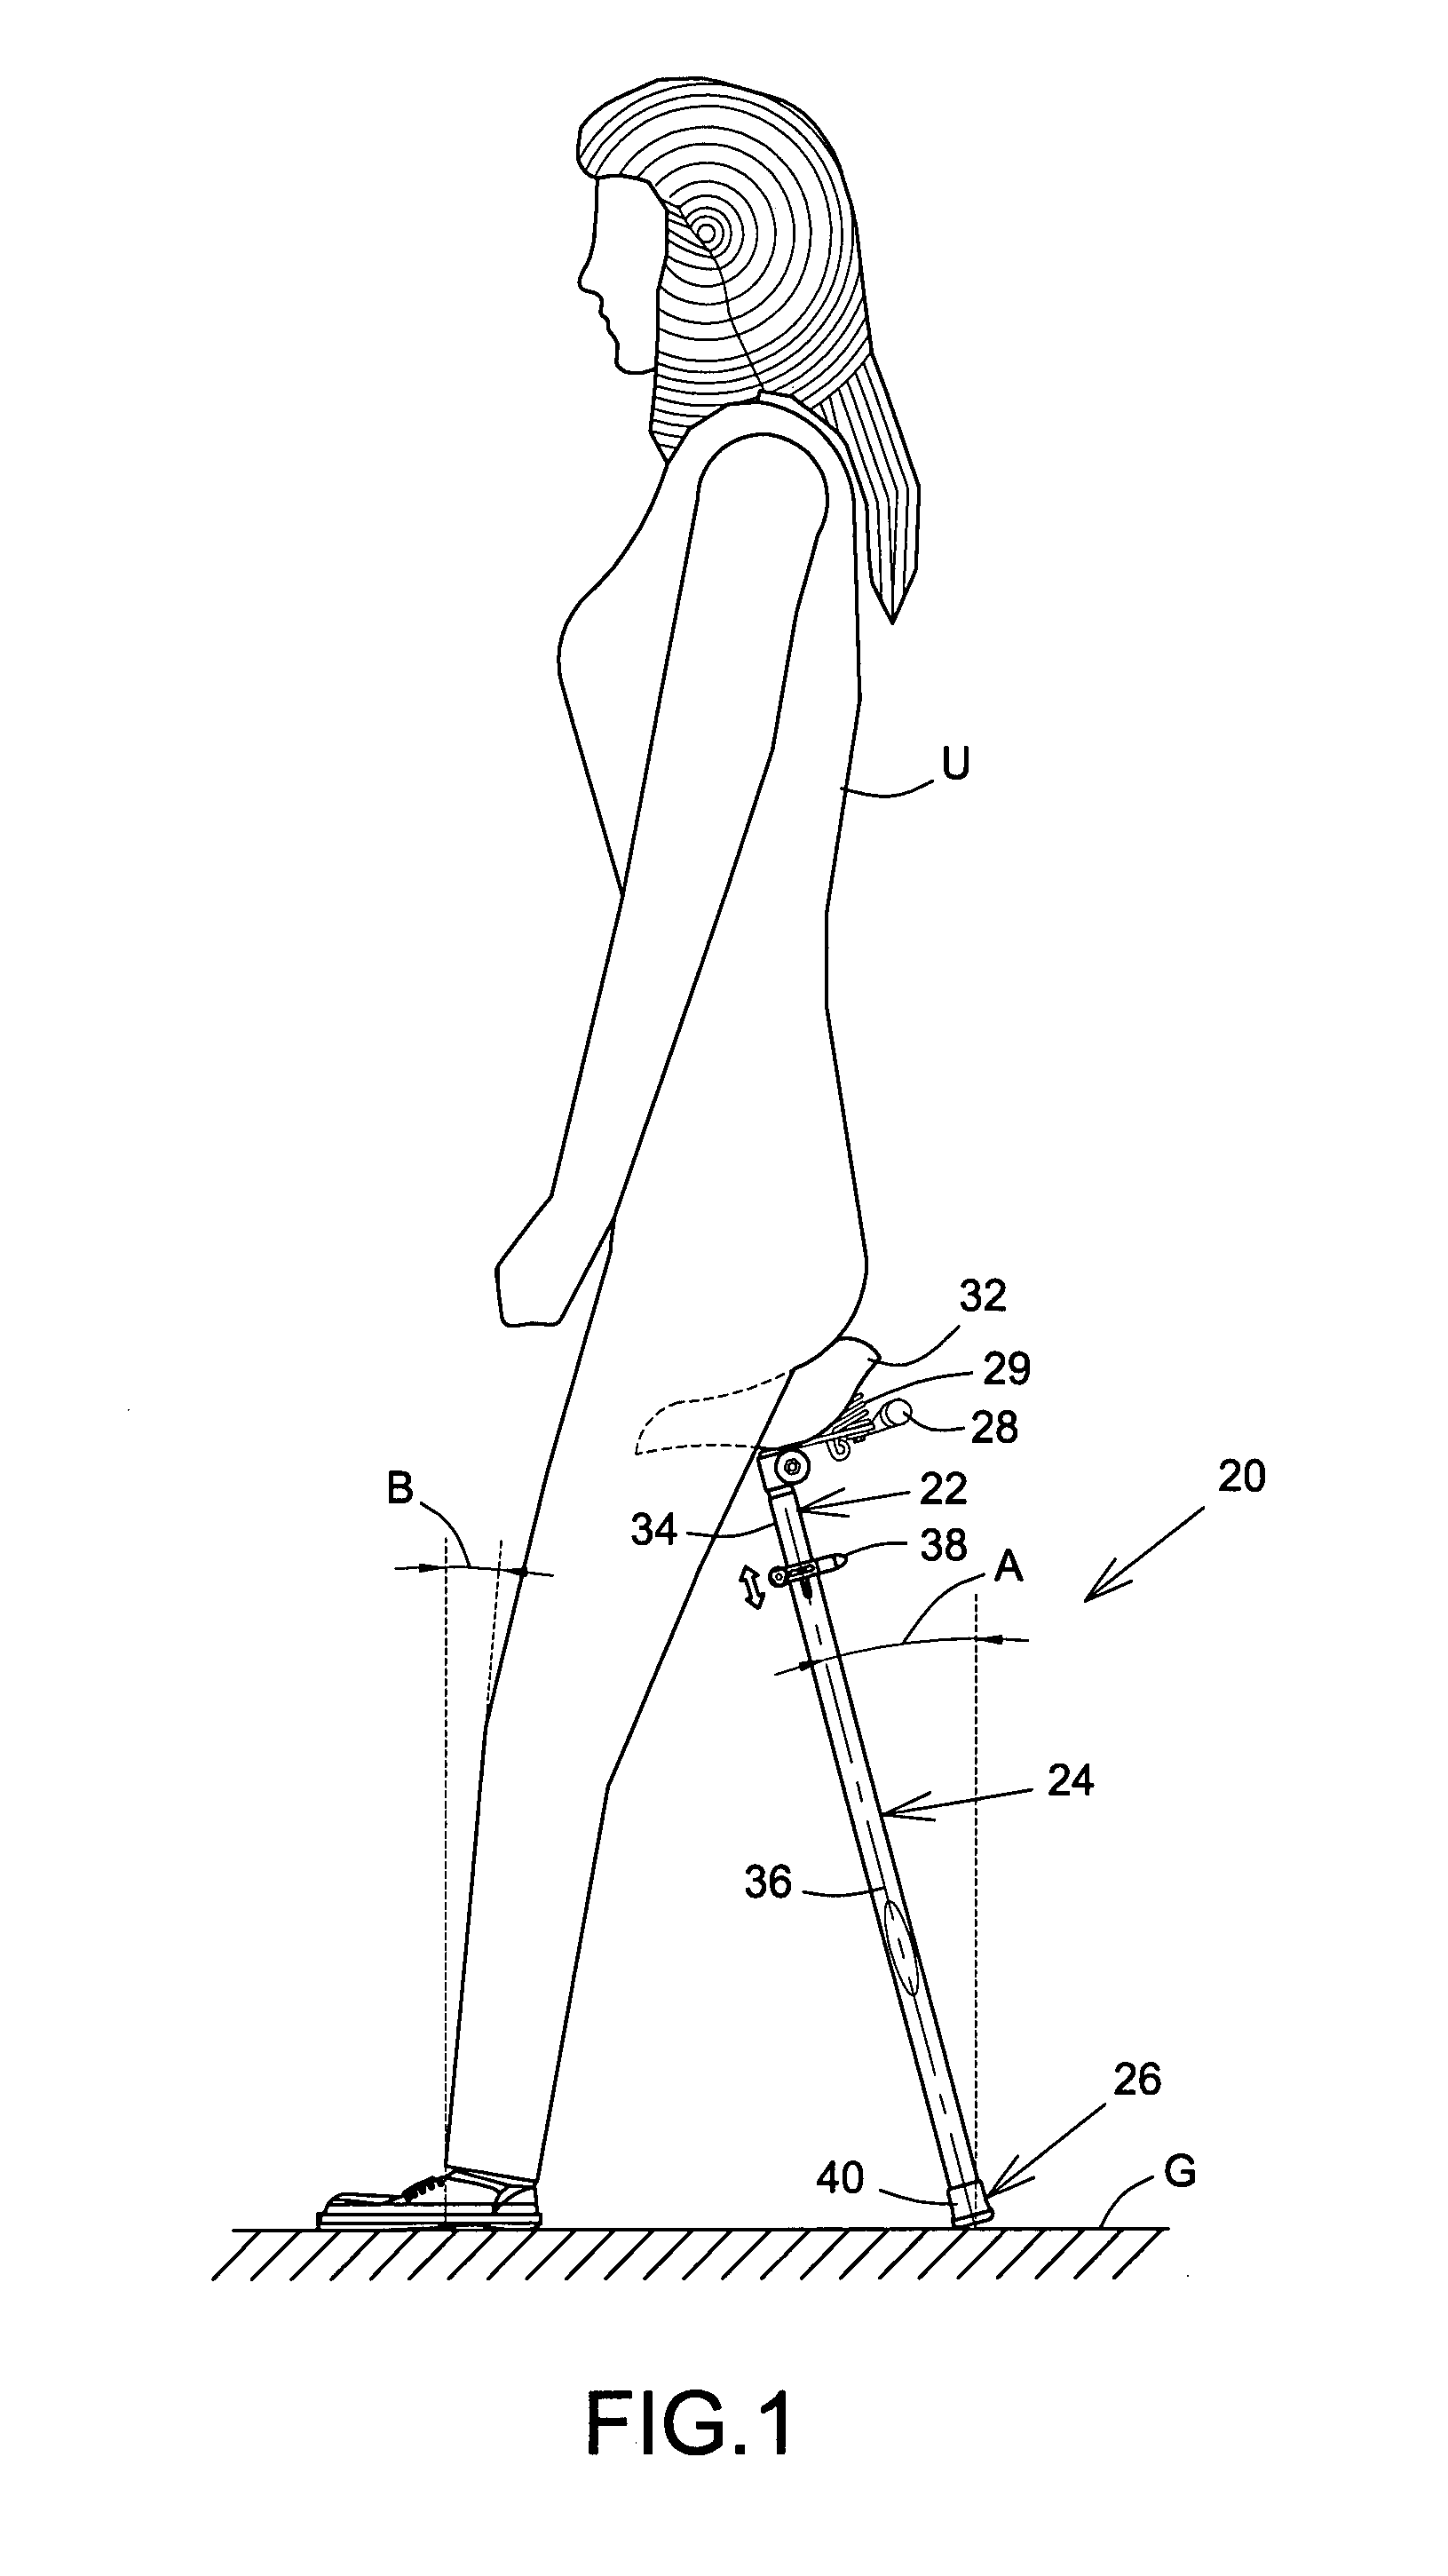 Single-leg support